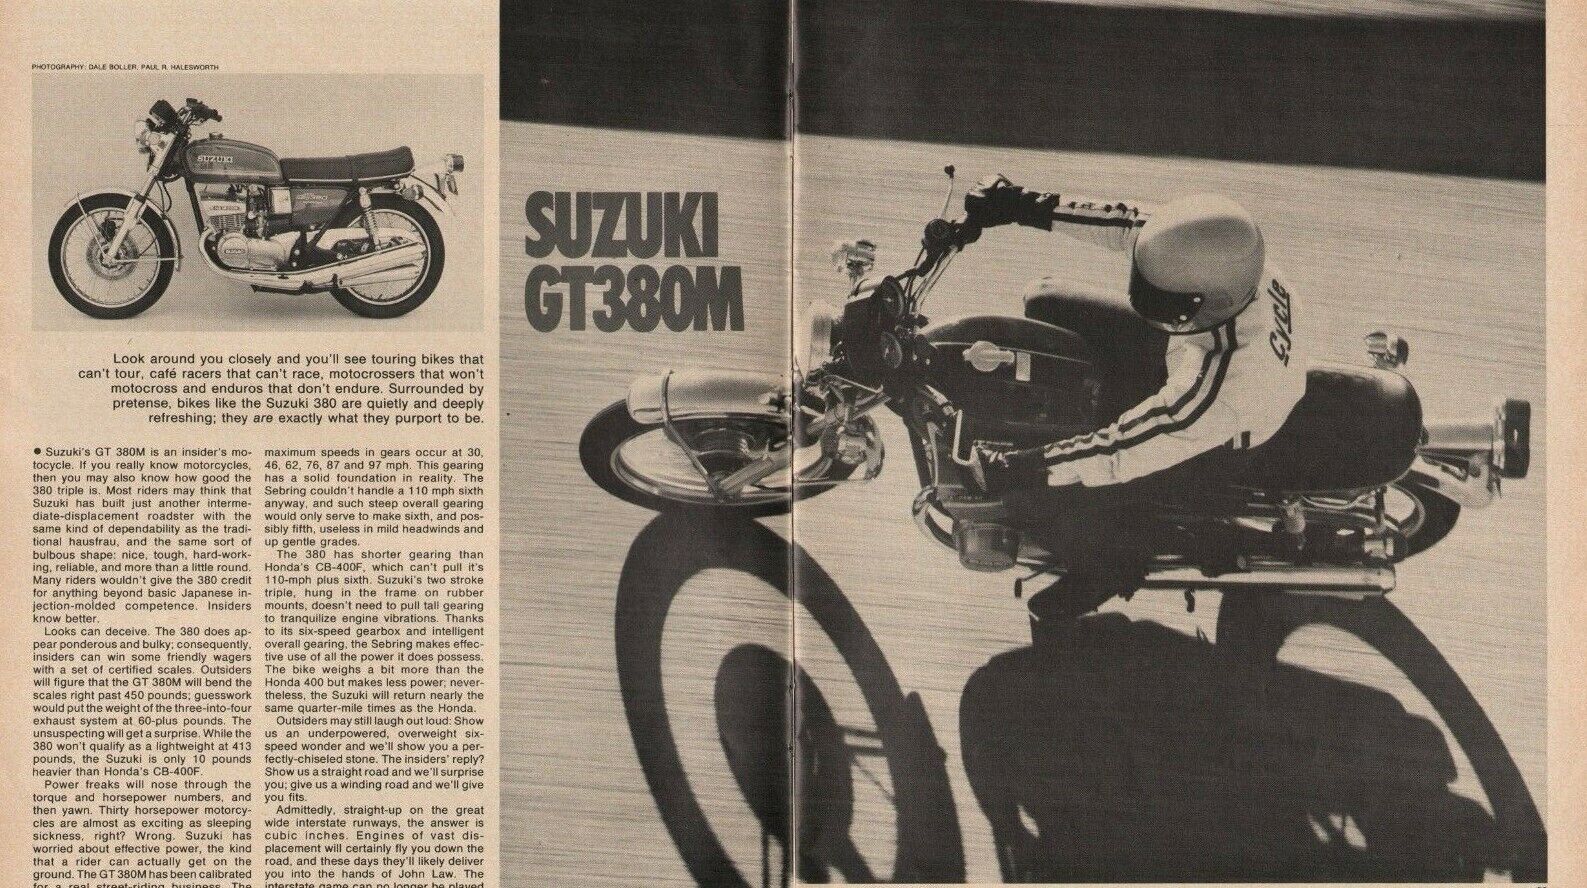 1975 Suzuki GT380M - 6-Page Vintage Motorcycle Road Test Article